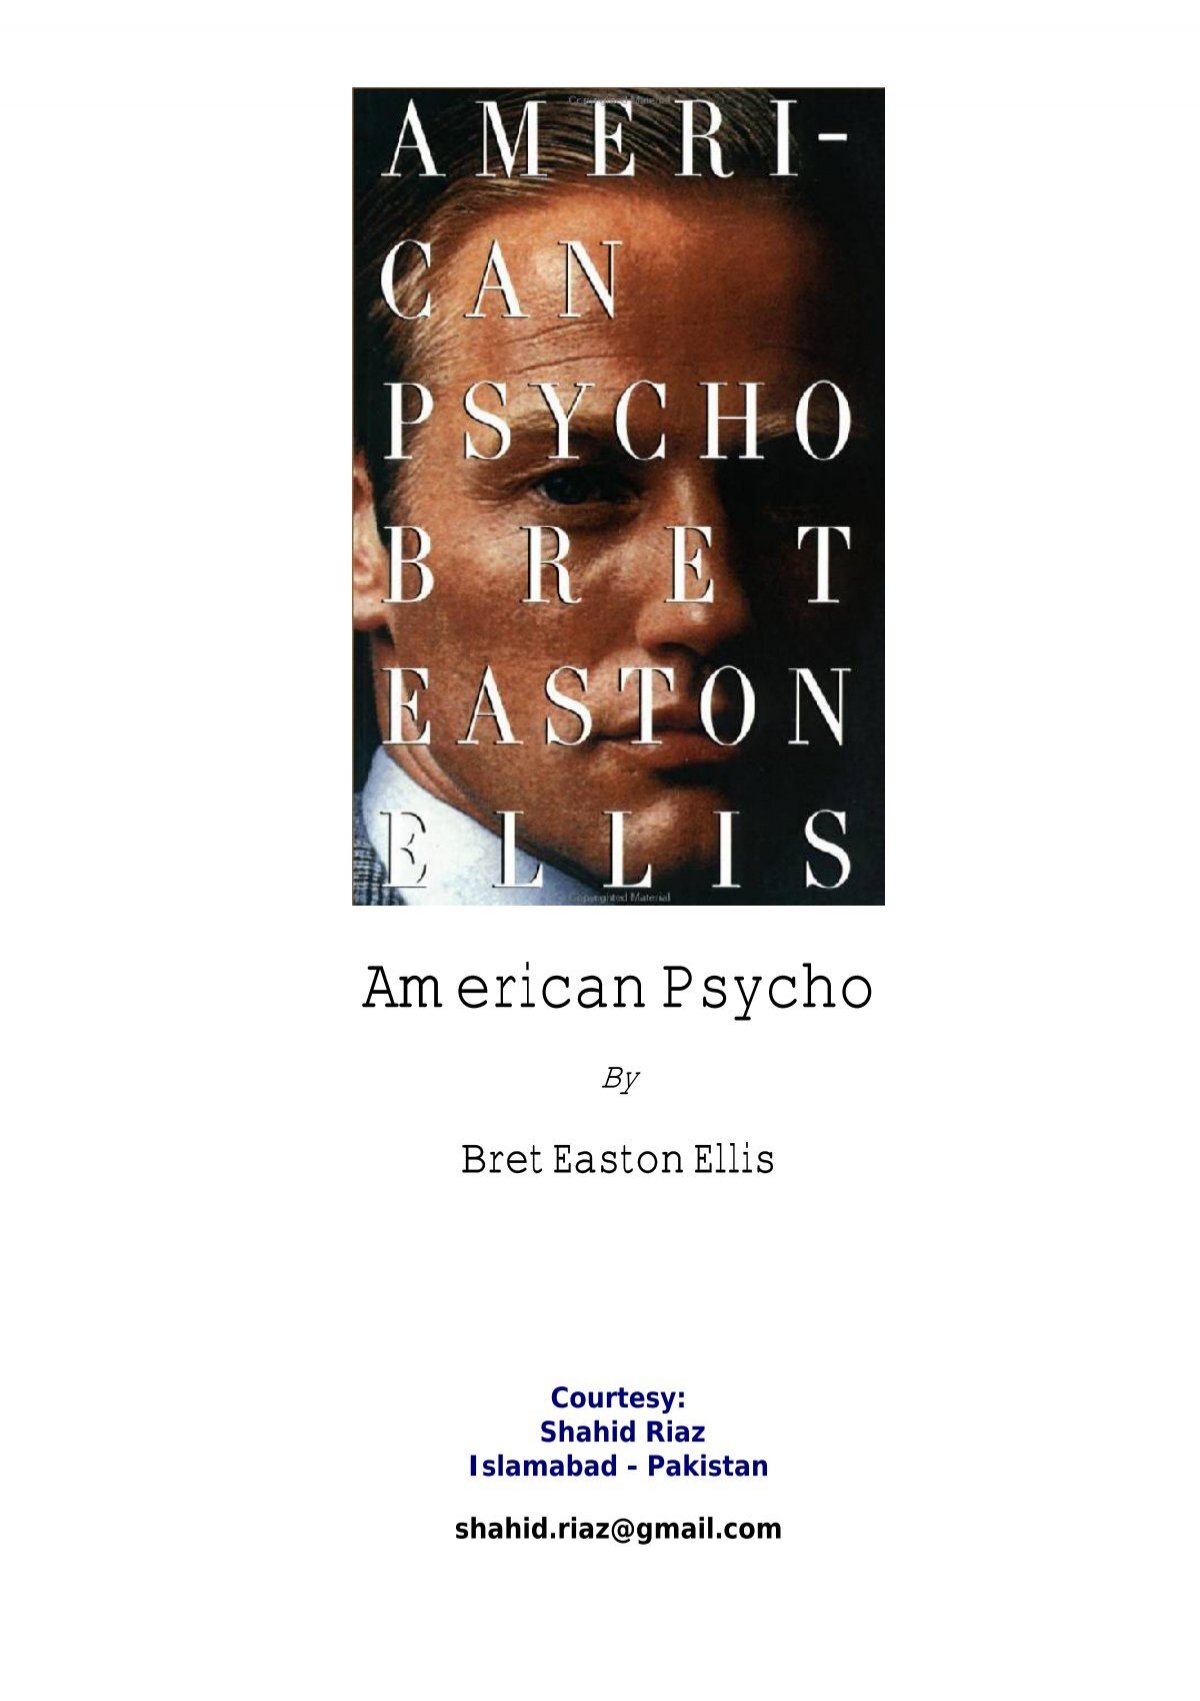 ellis-bret-easton-american-psycho